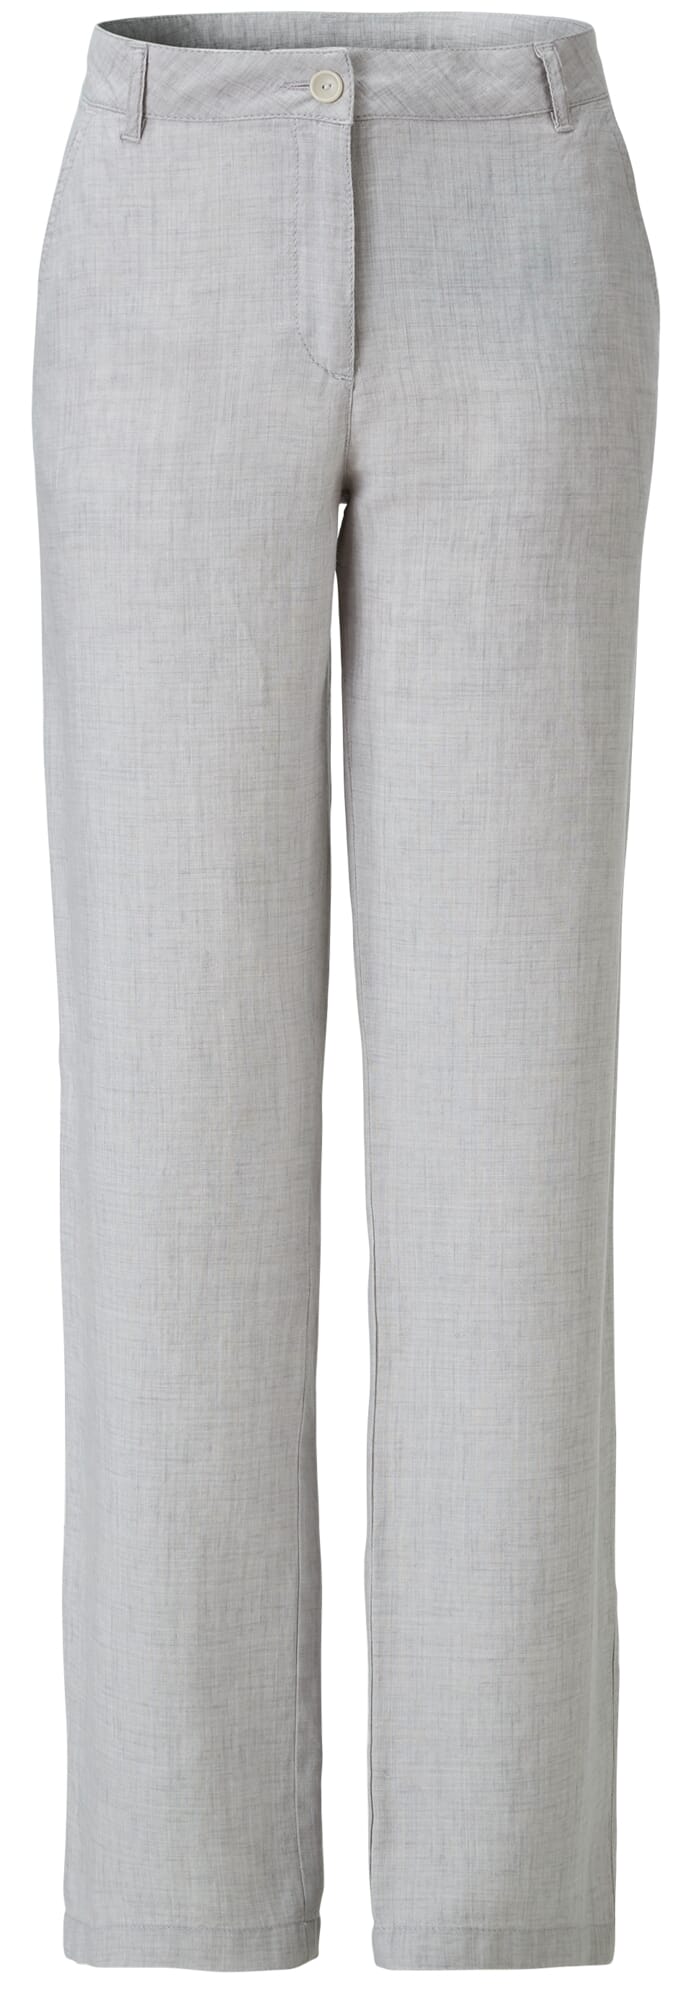 Fashion Light Grey High Waist Ladies Jeans Elastic Slim Fit Ladies Trousers  price from jumia in Kenya  Yaoota